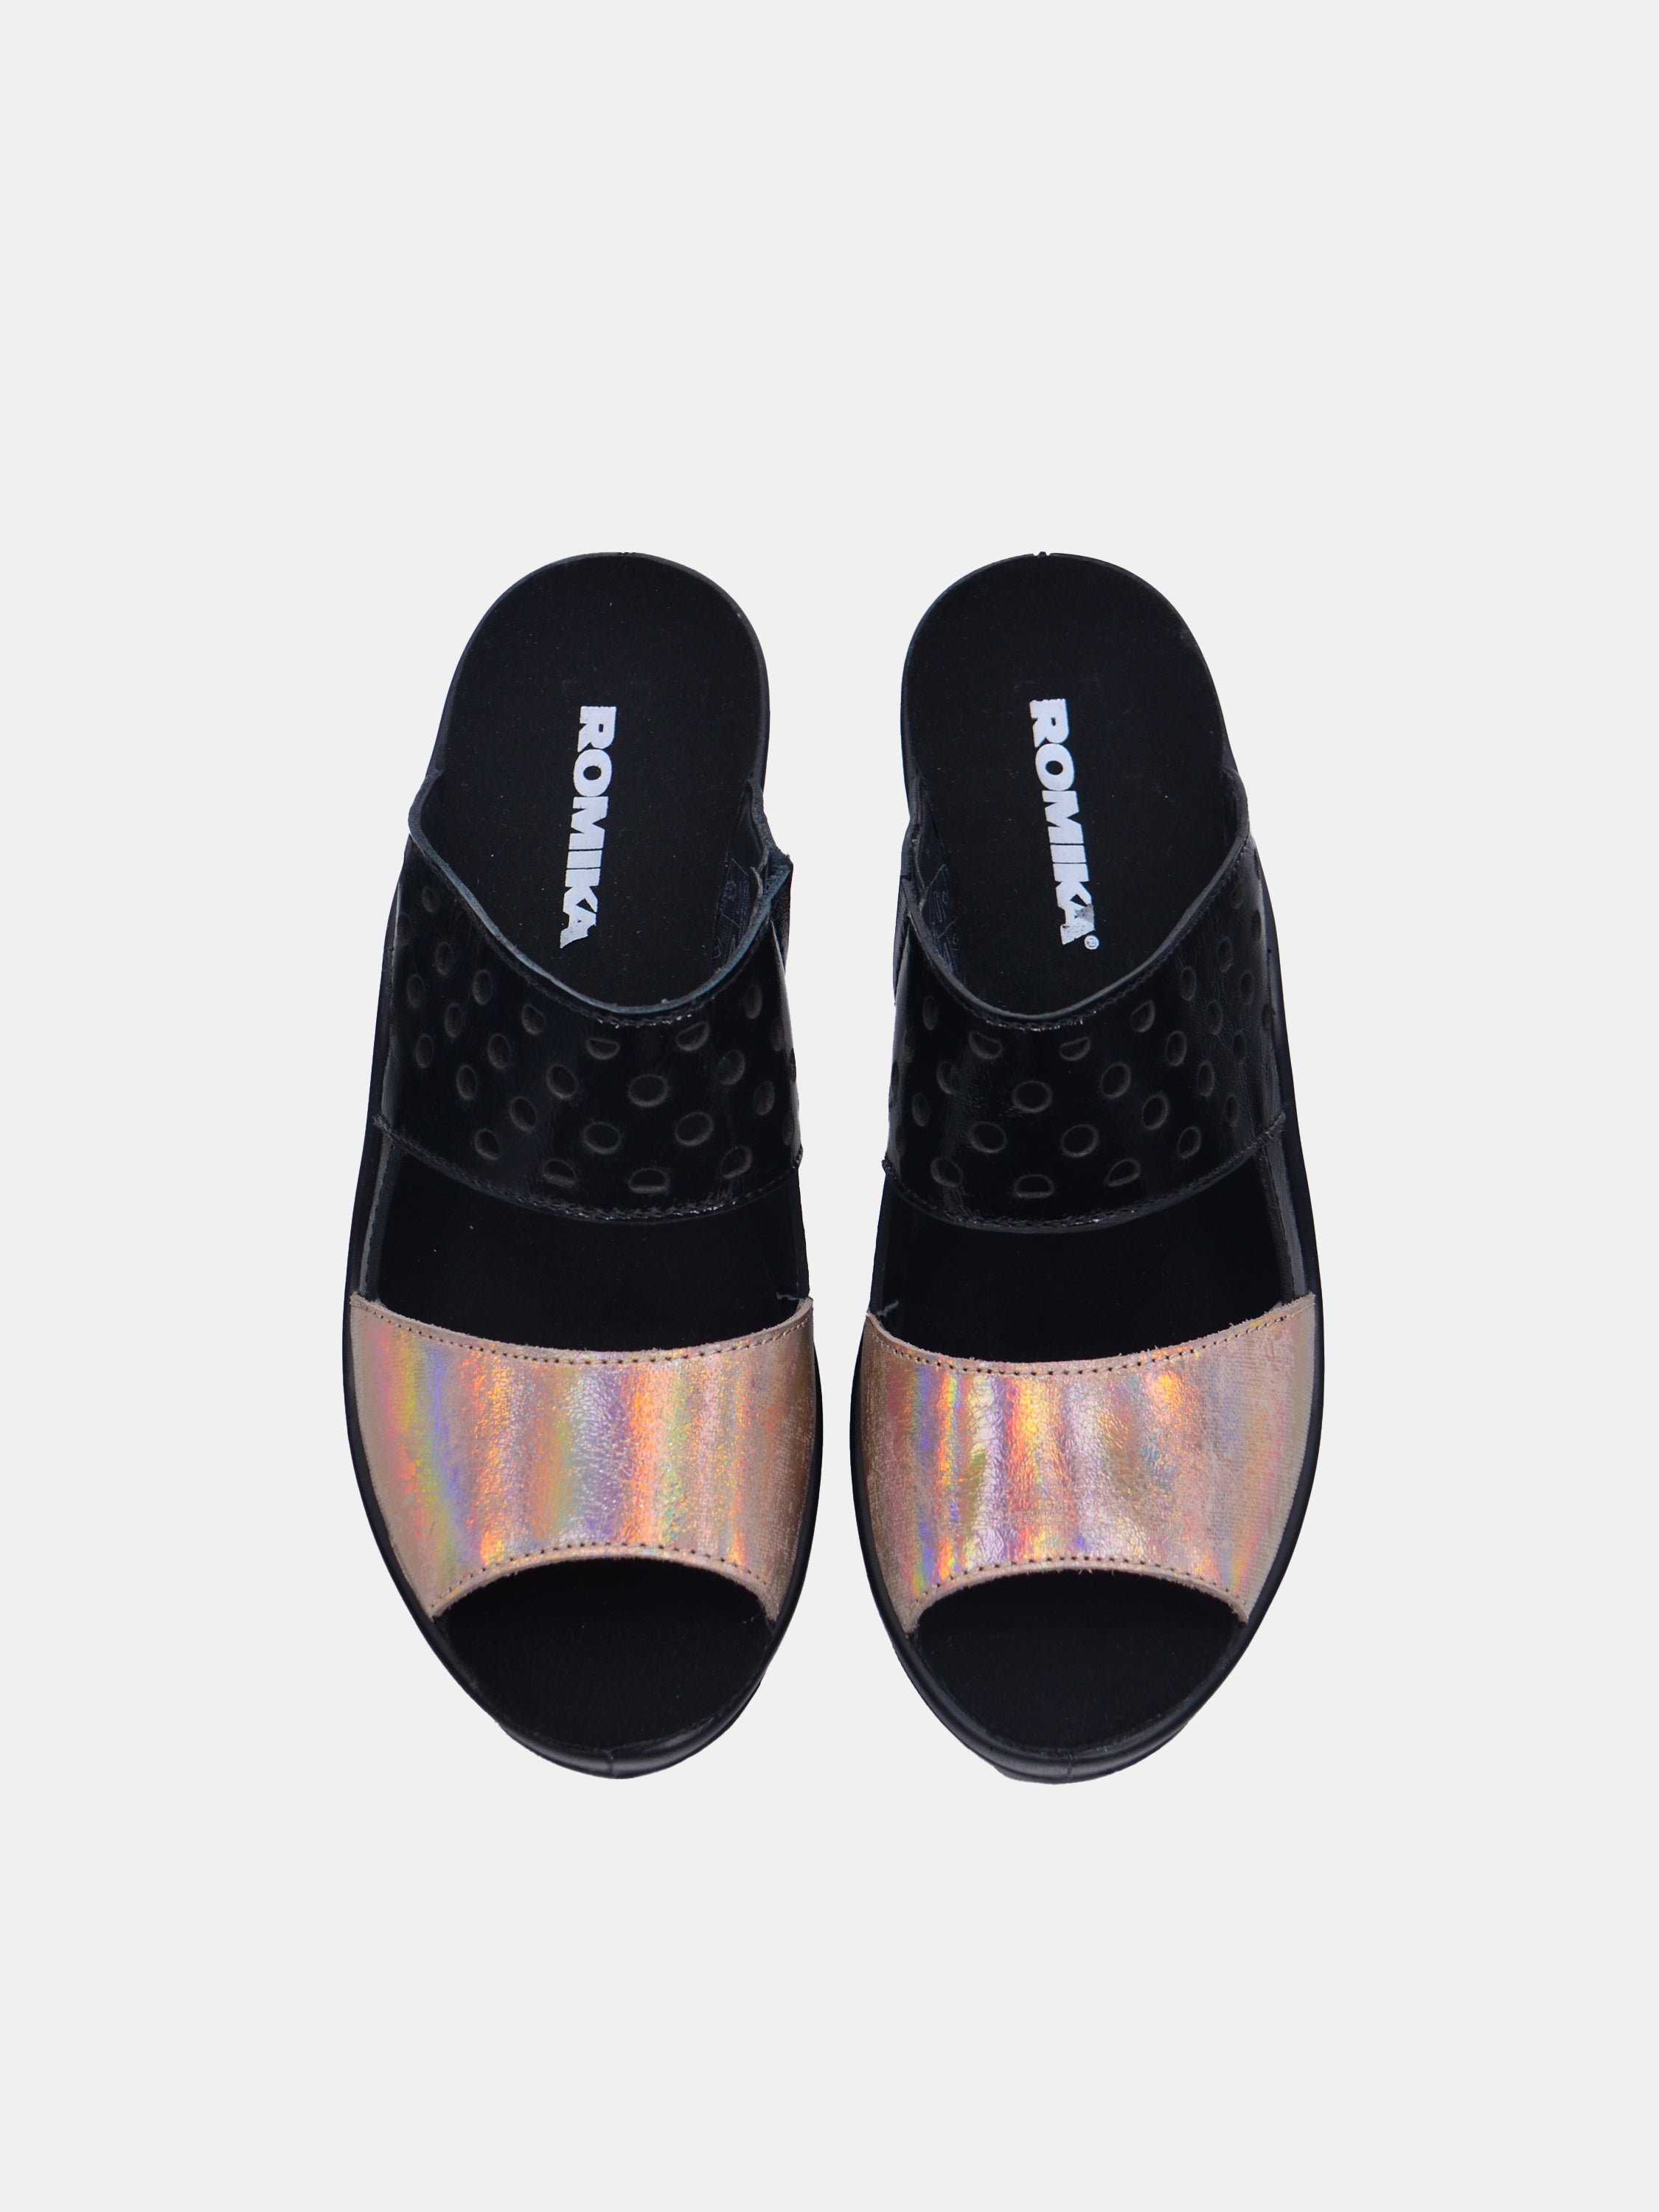 Romika 27154 Women's Heeled Sandals #color_Black 2